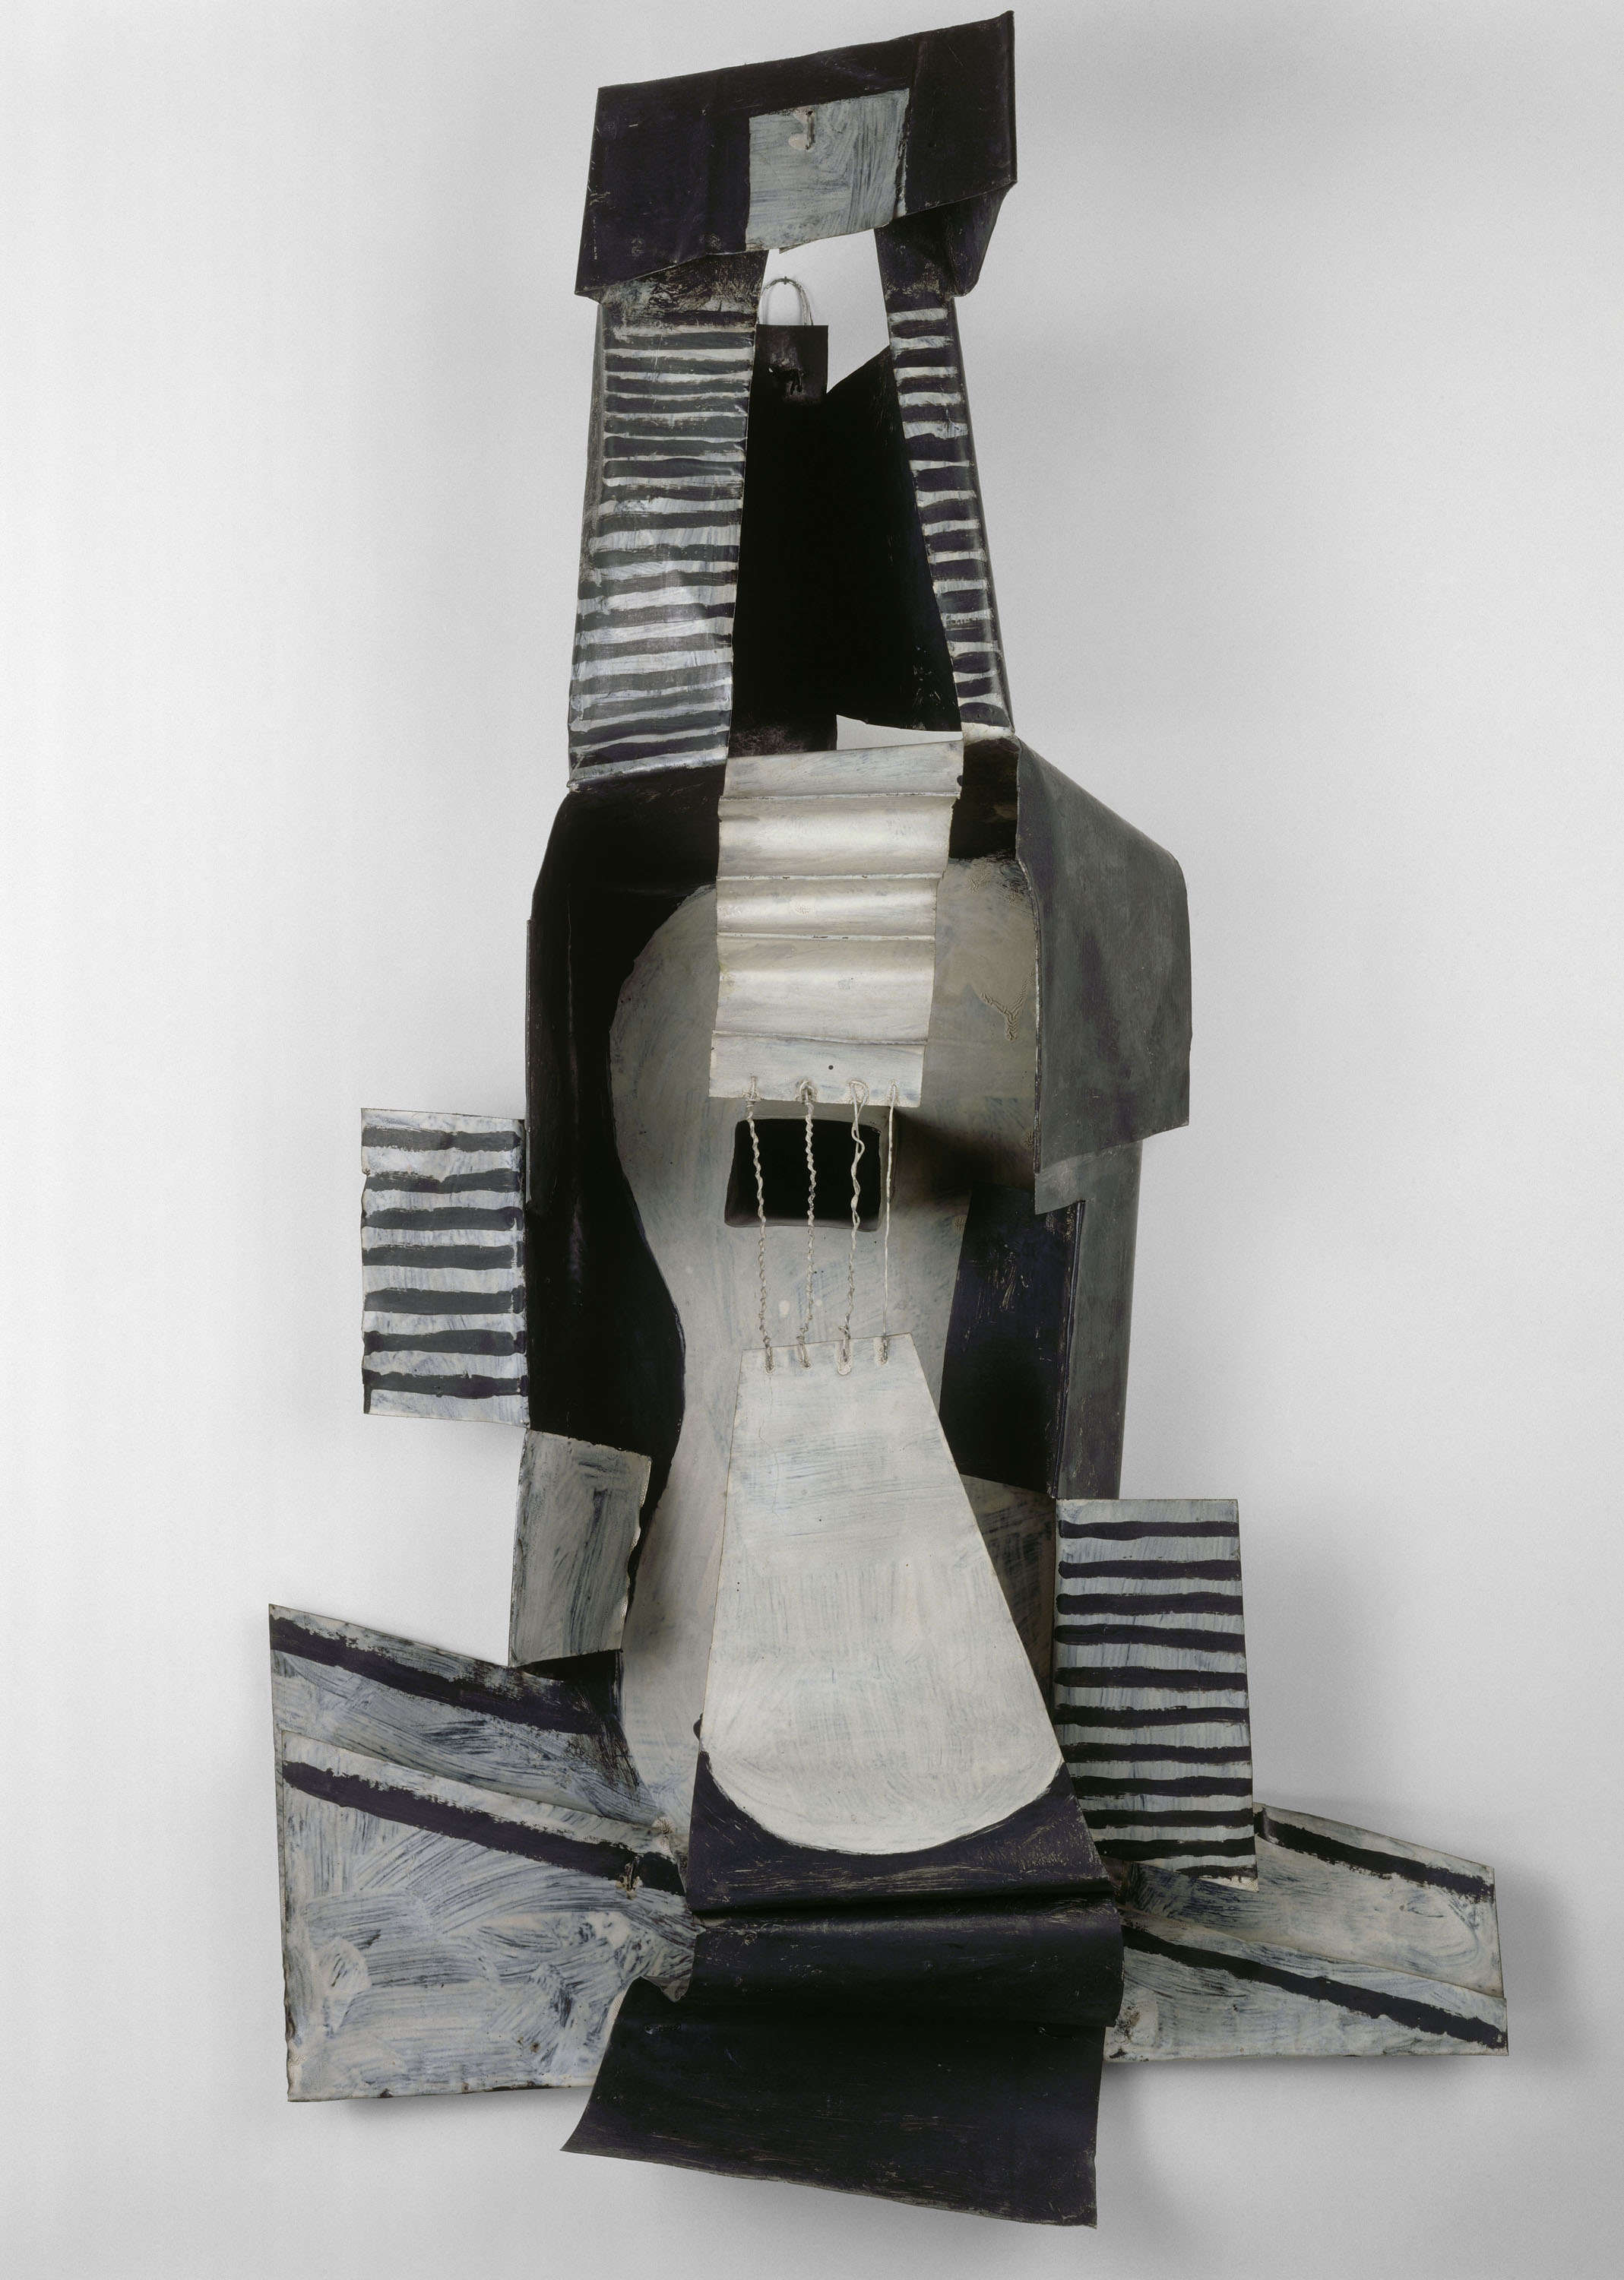 Guitare Picasso Pablo (dit), Ruiz Blasco Pablo (1881-1973) Paris, musée Picasso